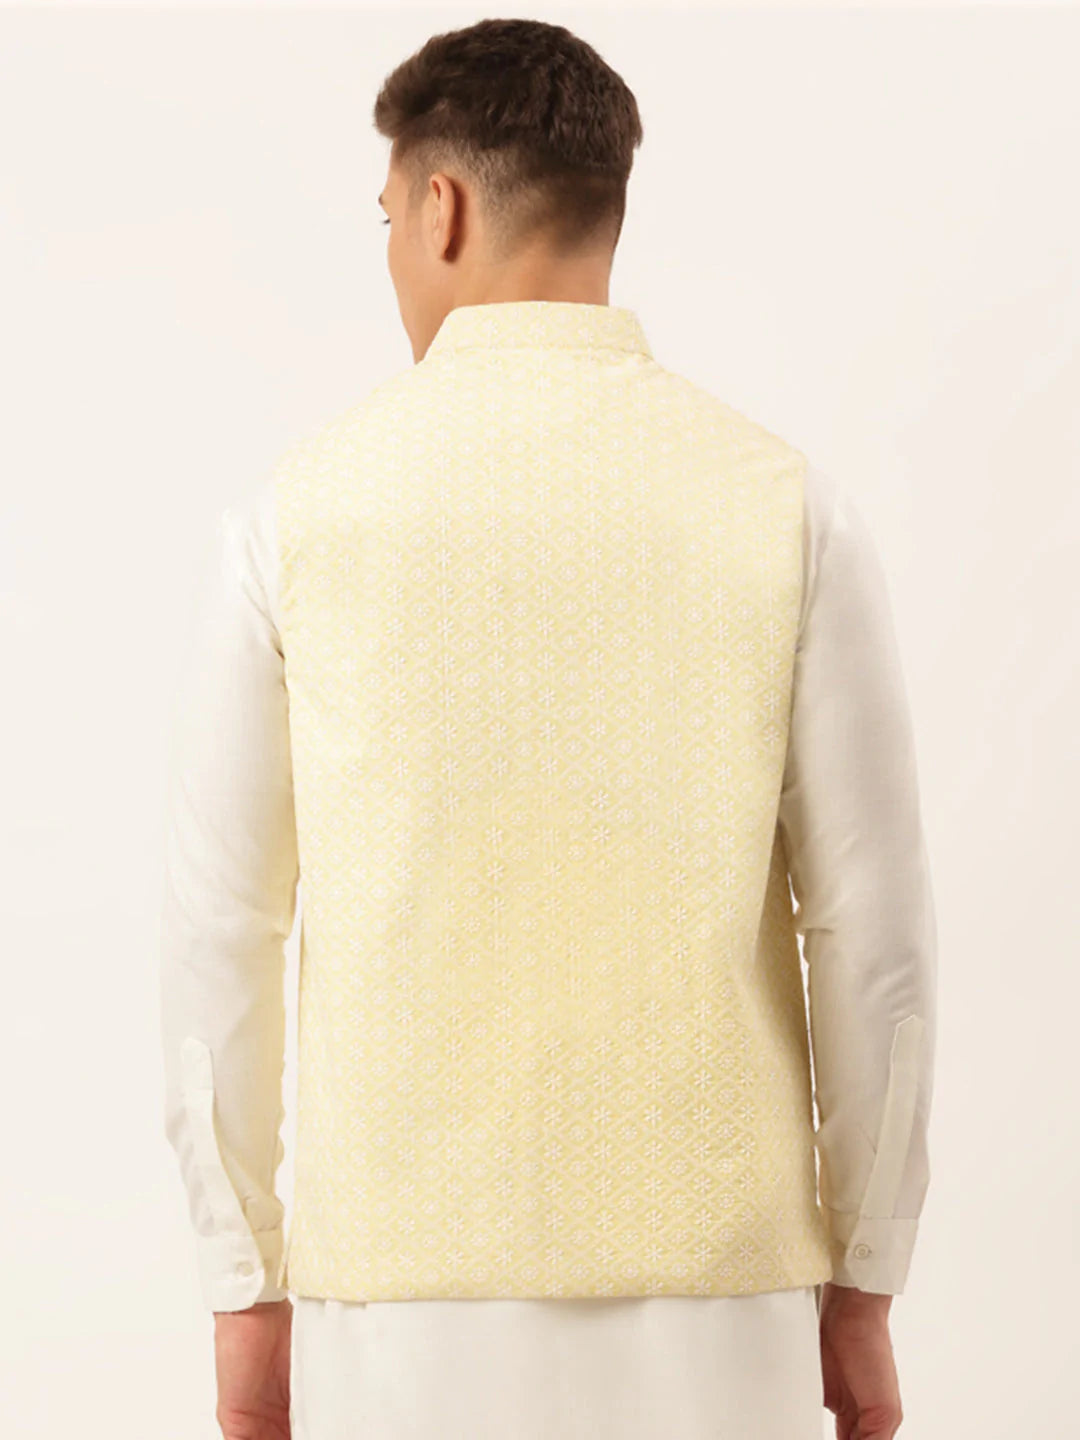 Men's Lemon Cotton Chikankari Nehru Jacket